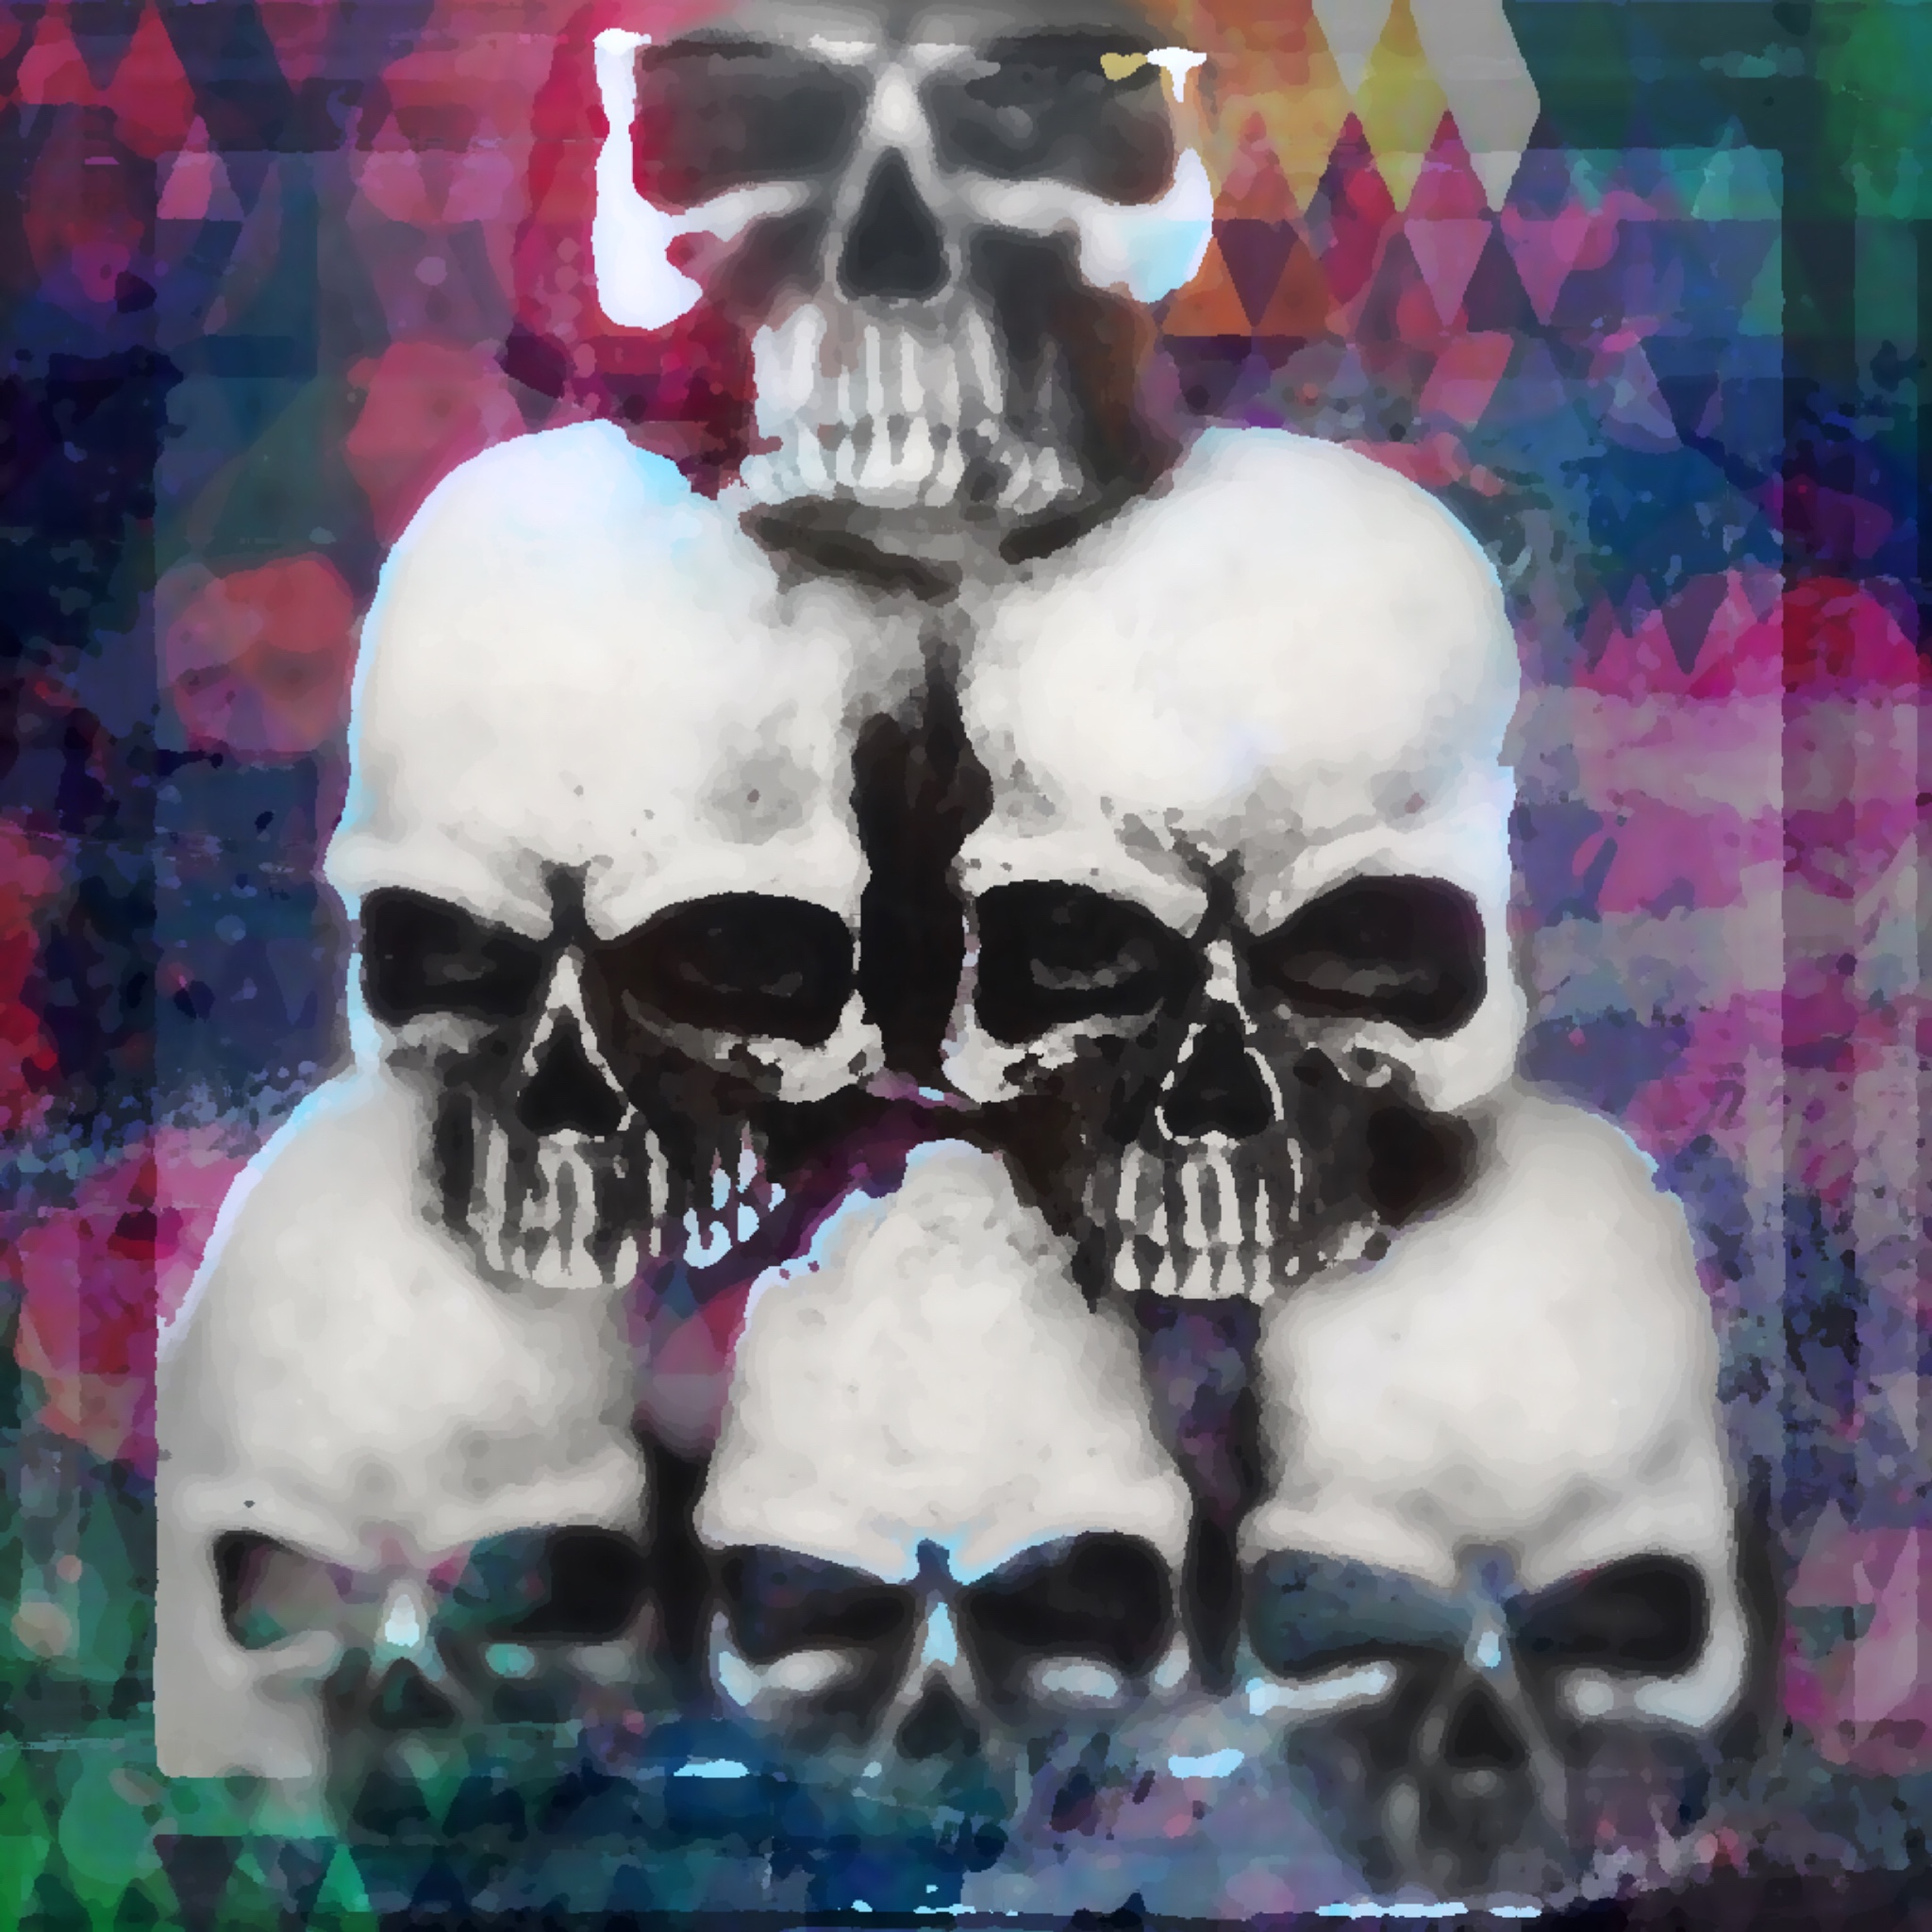 Alas,Poor YorickPyramid of skulls